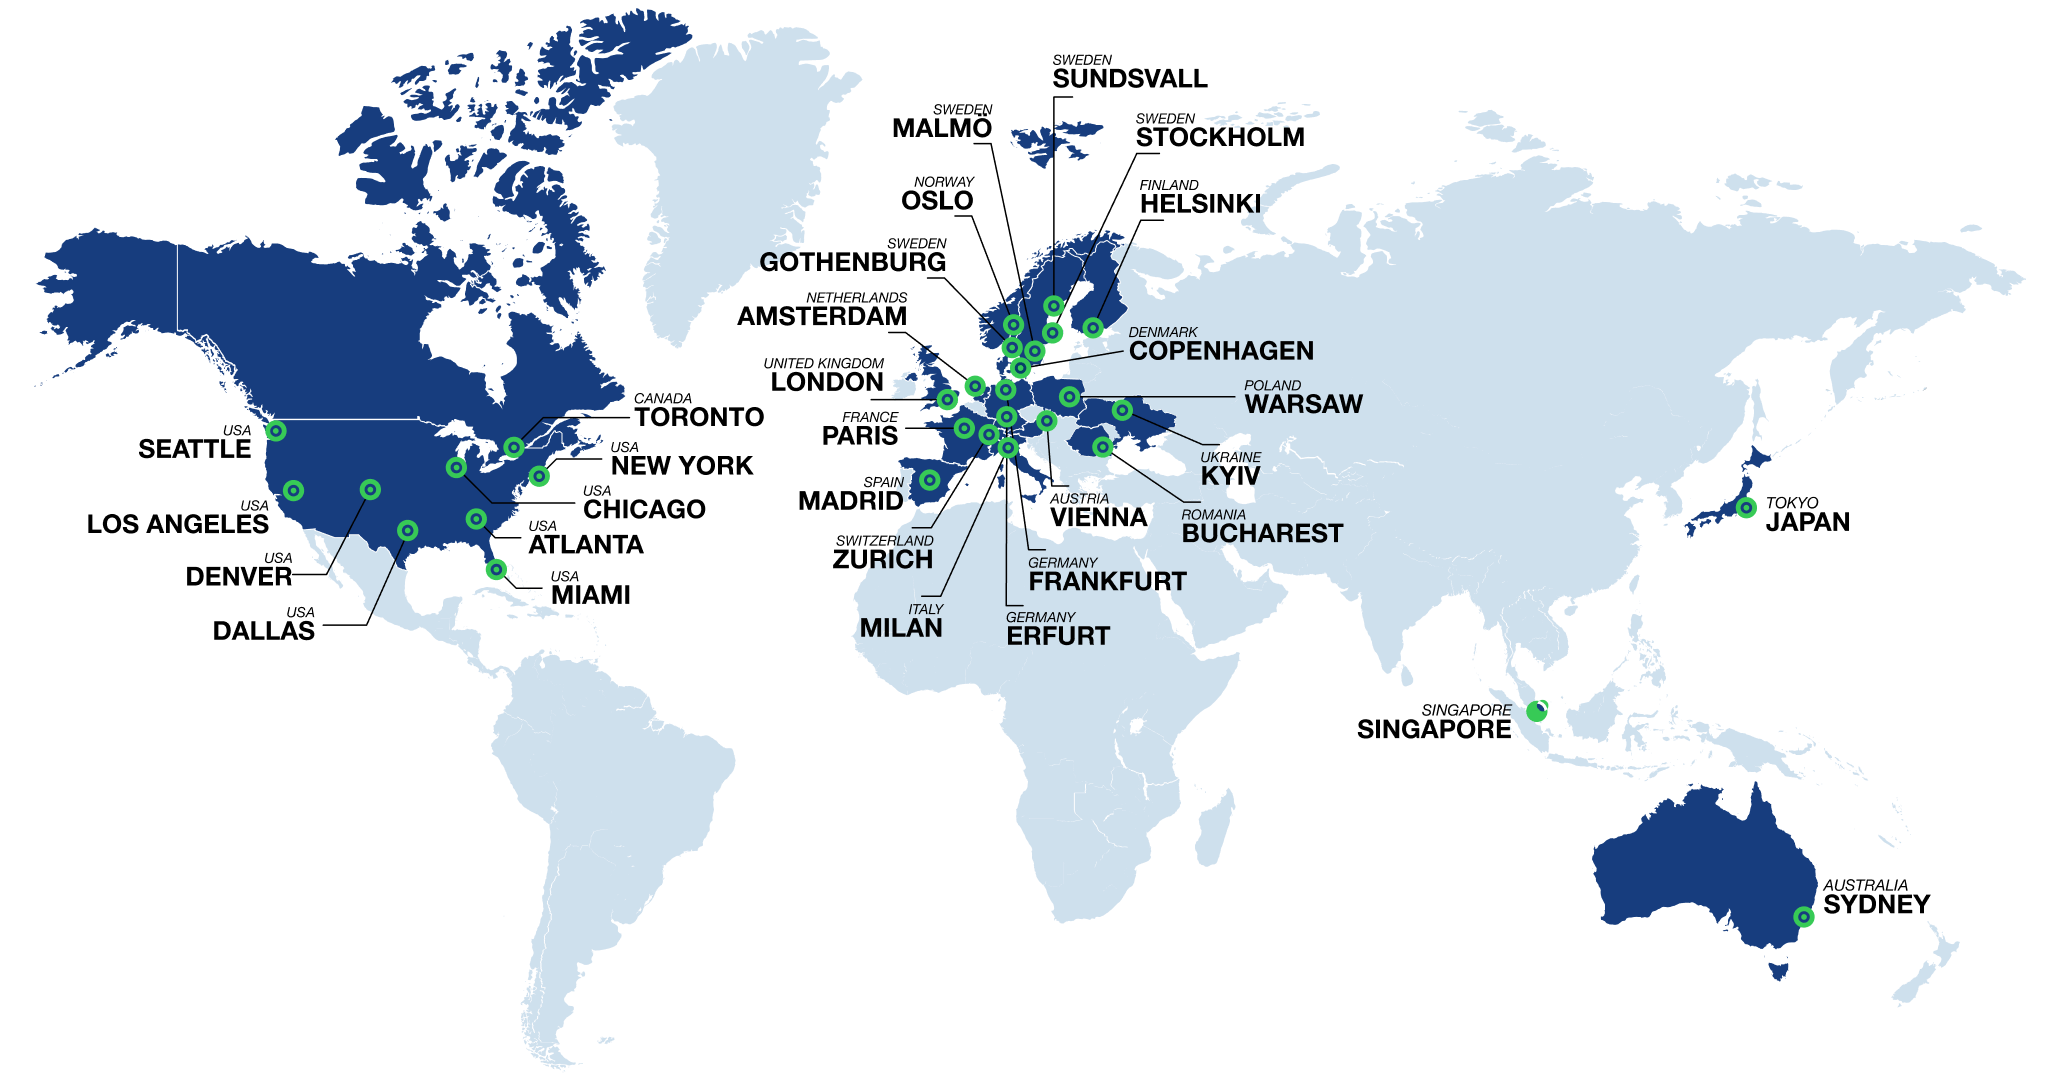 VPN servers in 32 cities across the globe